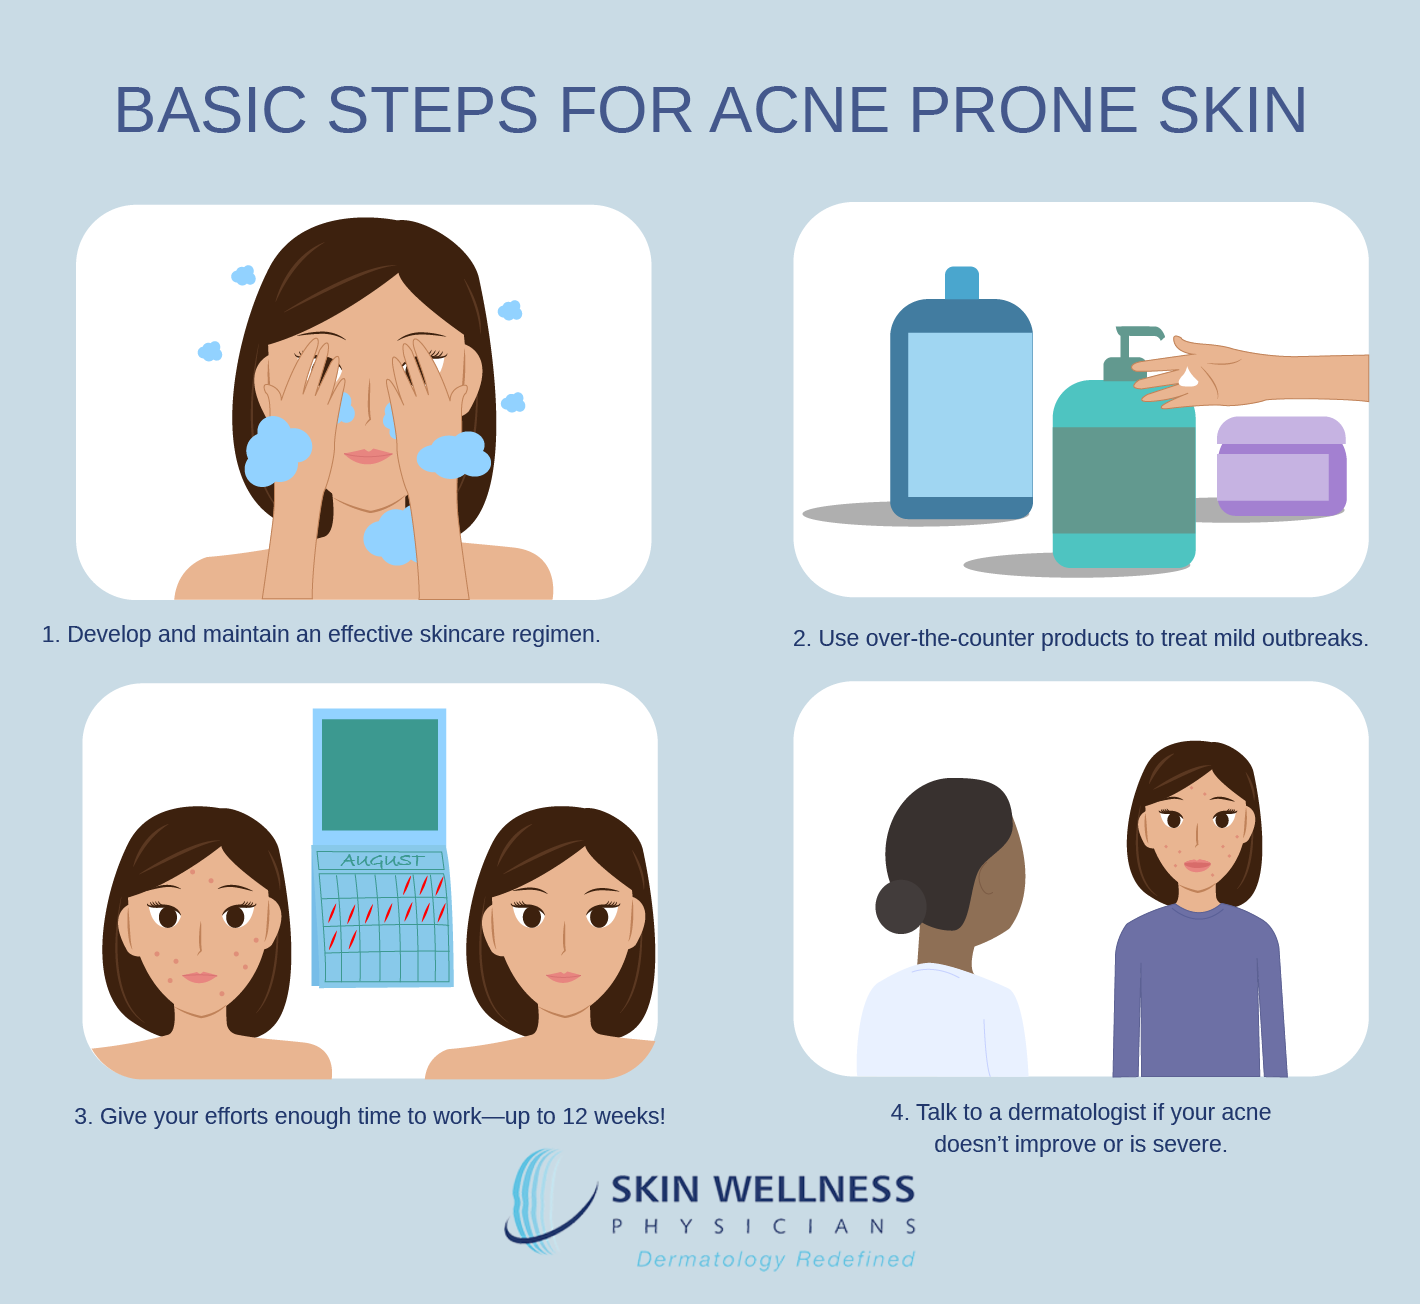 Besic Steps for Acne Prone Skin